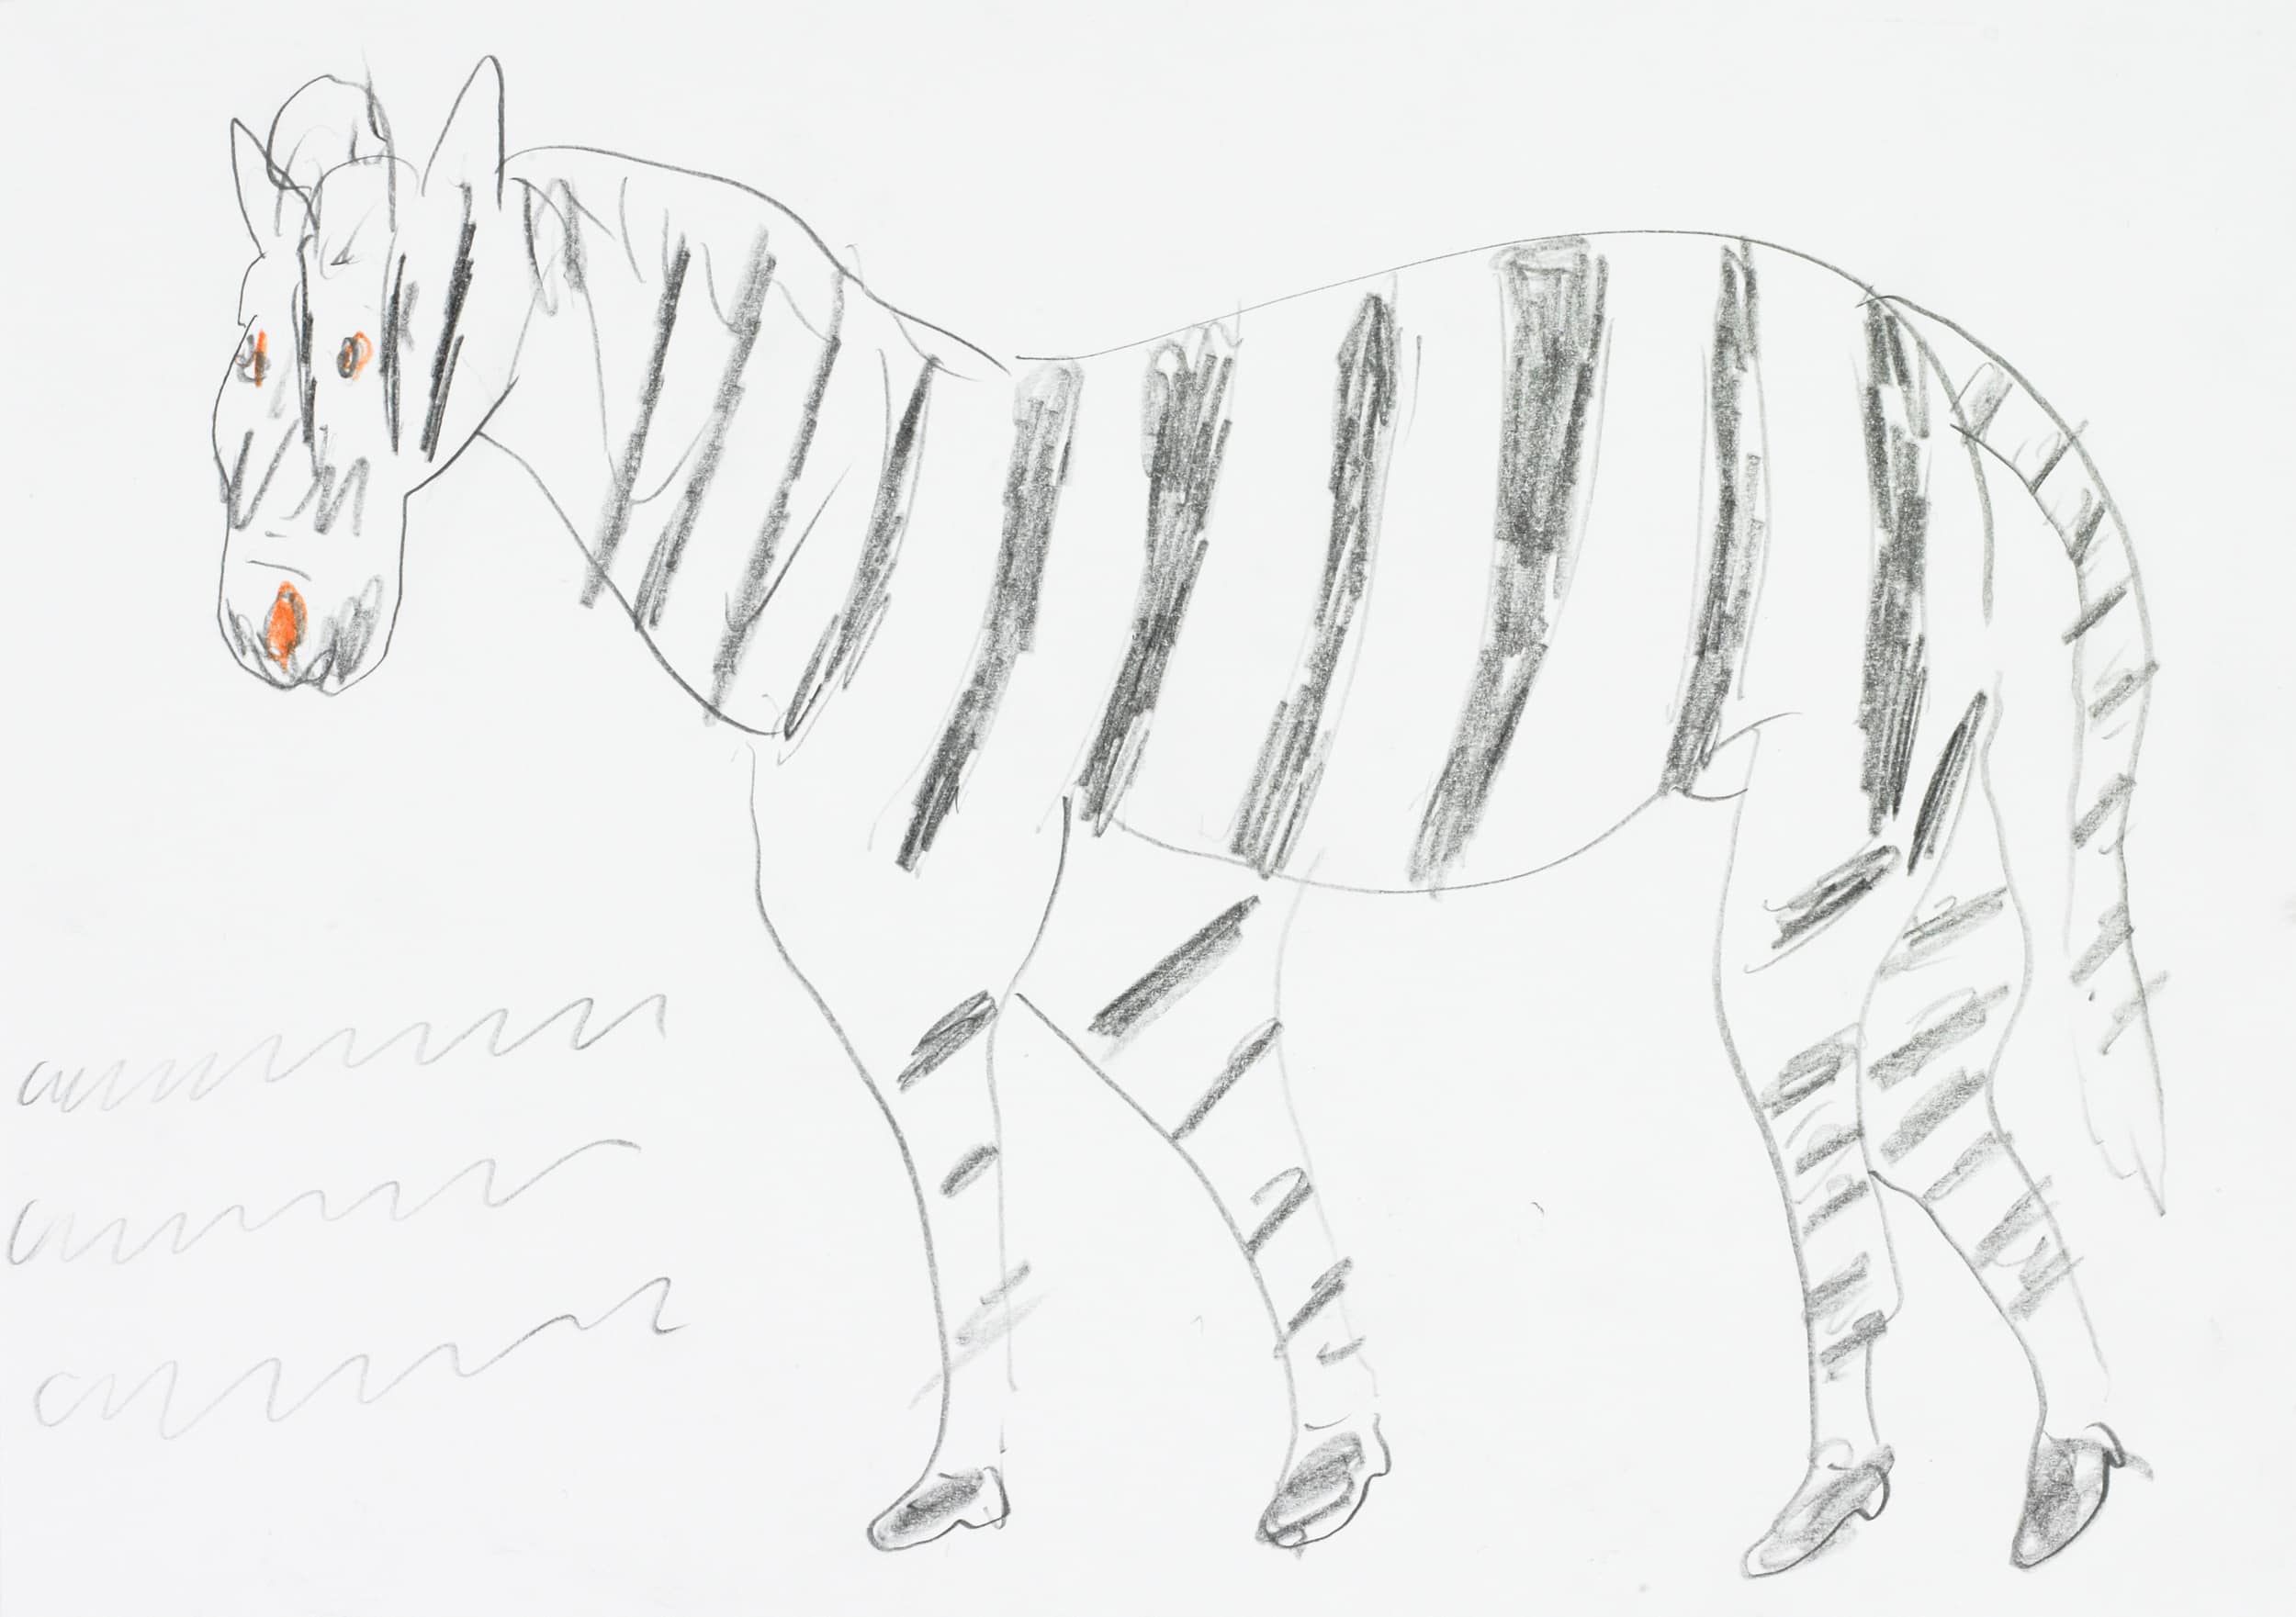 kamlander franz - Zebra